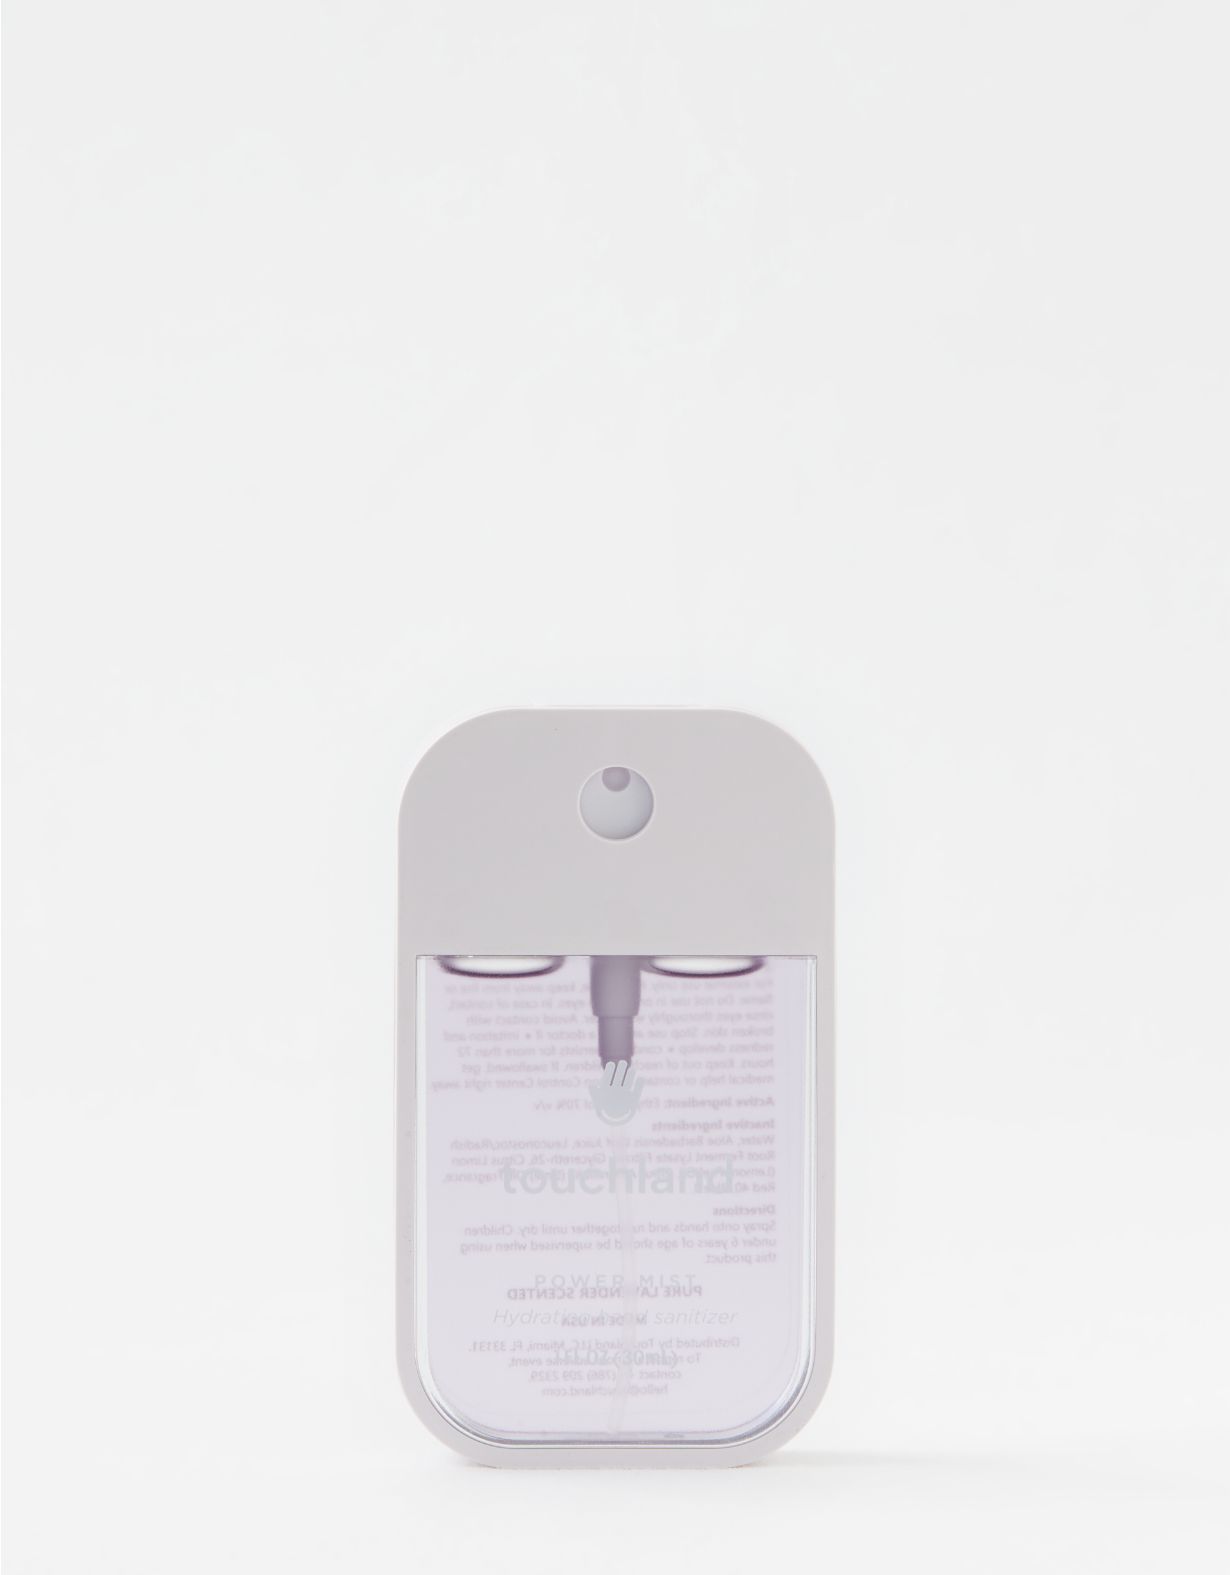 Touchland Power Mist Hand Sanitizer - Pure Lavender - 30 ml